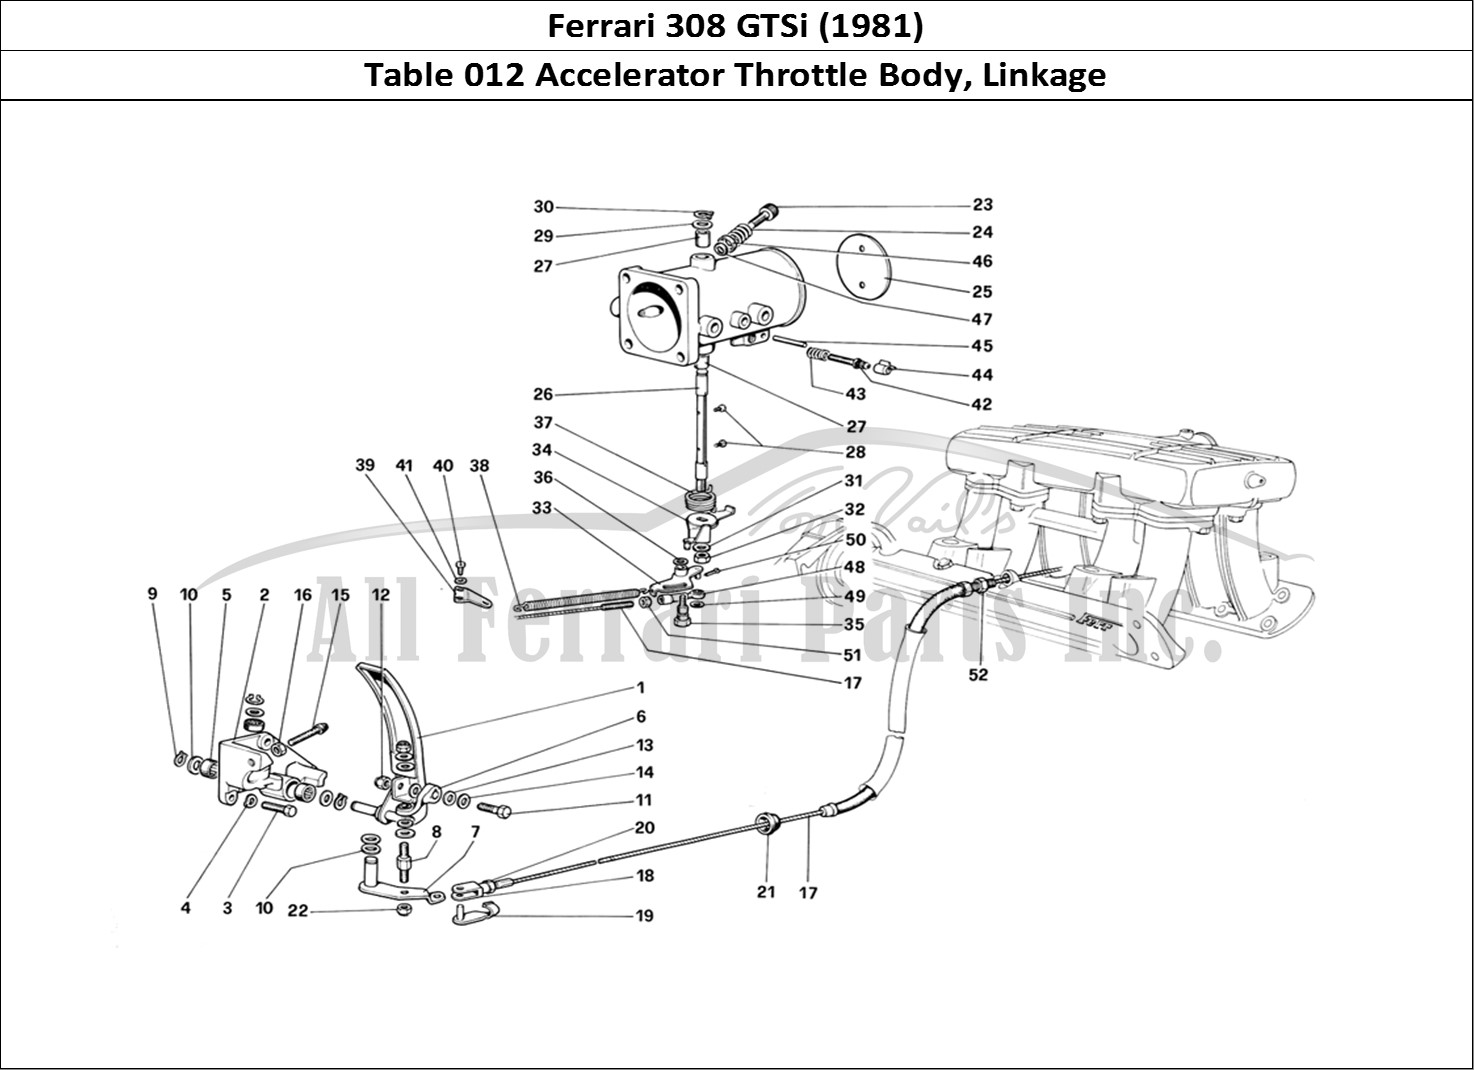 Ferrari Parts Ferrari 308 GTBi (1981) Page 012 Throttle Housing and Link